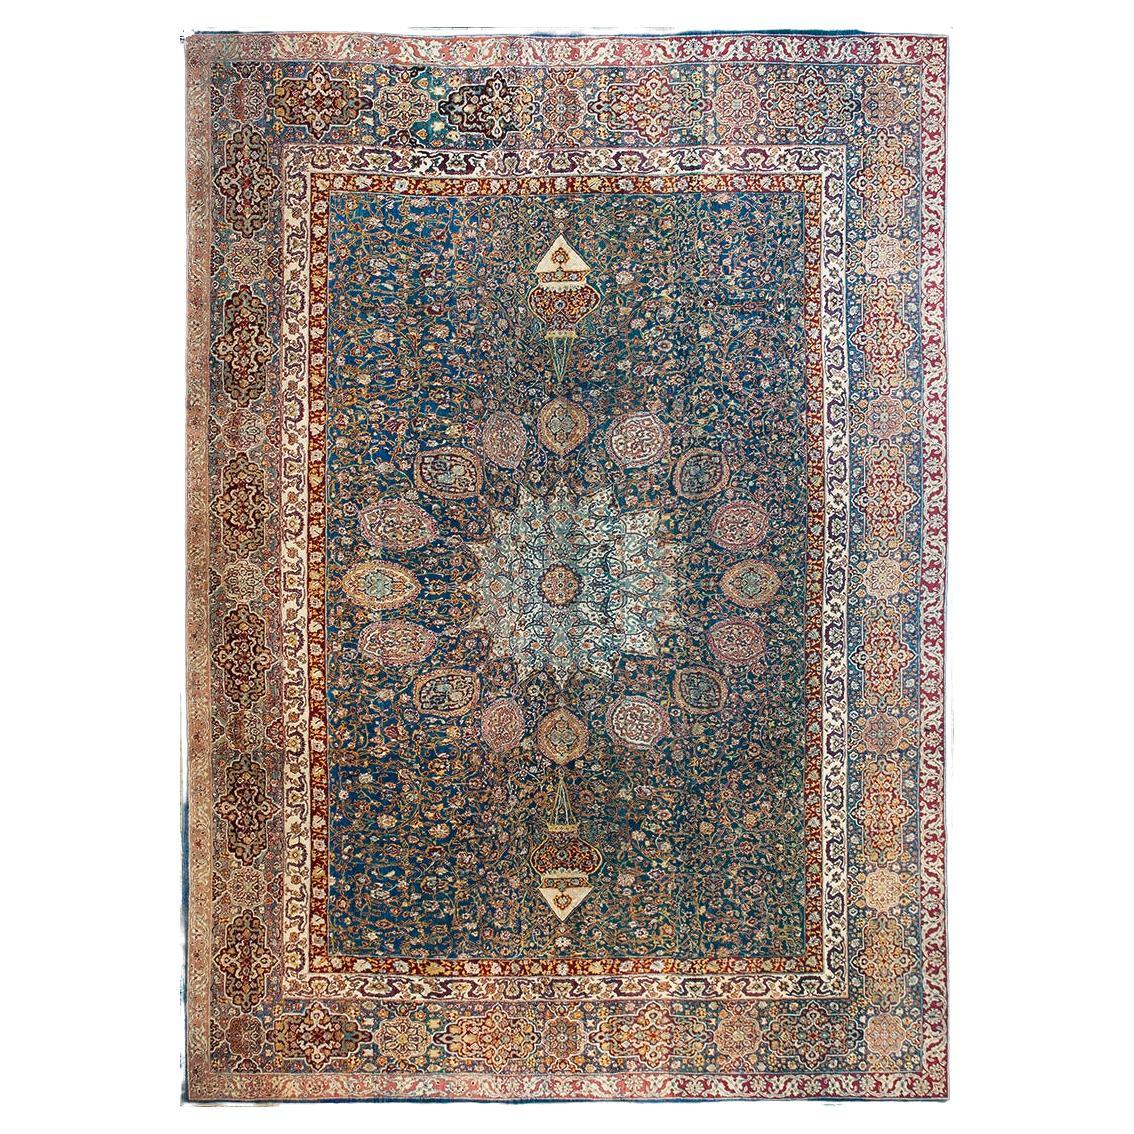 Late 19th Century N. Indian Agra Carpet ( 10'8" - 14'10" - 325 x 452 )